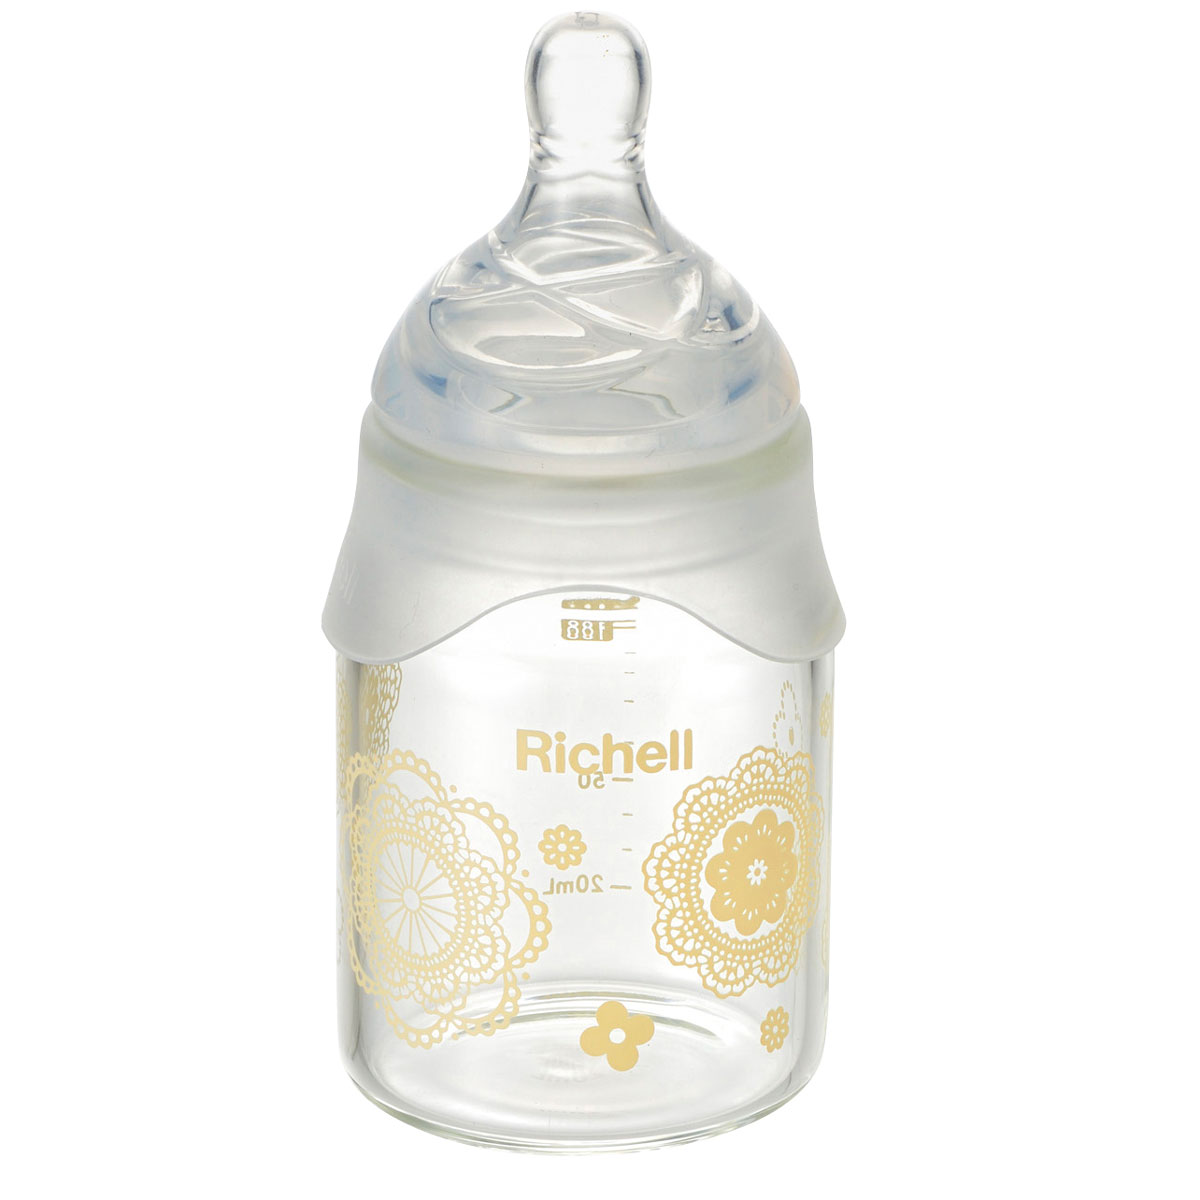 richell 利其爾藕池奶瓶耐熱玻璃奶瓶0-3個月左右個月